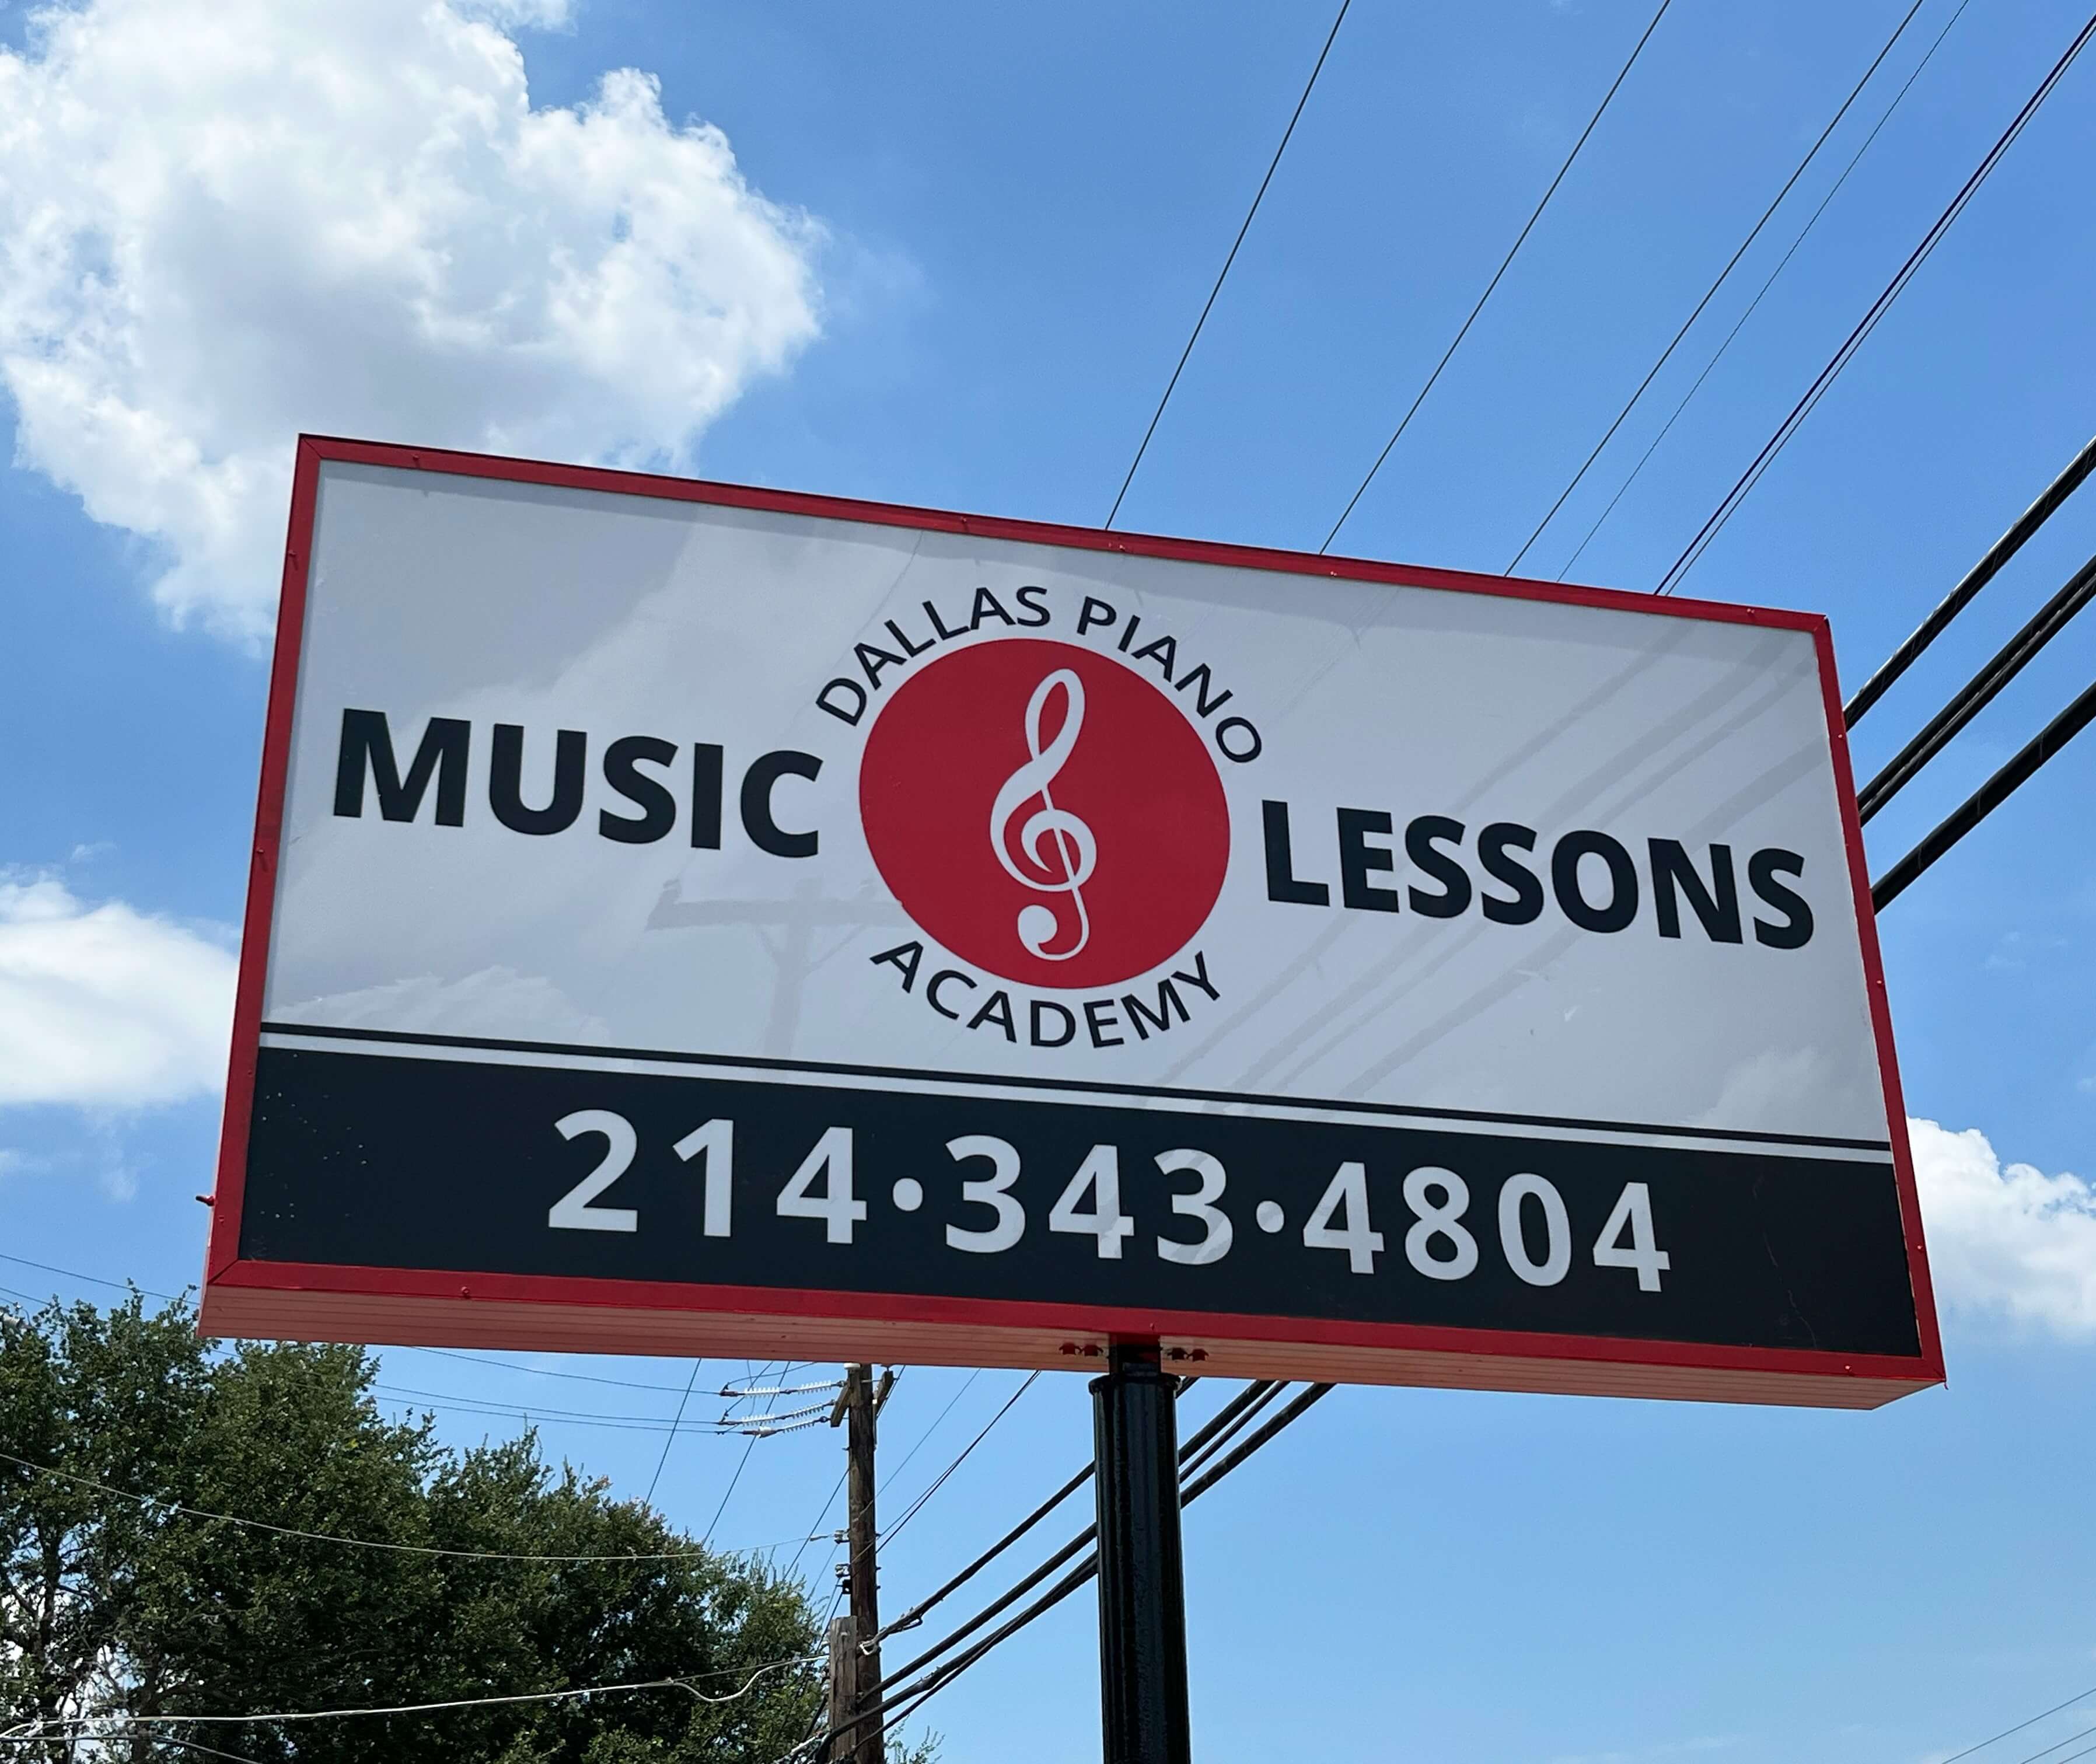 Dallas Piano Academy Sign